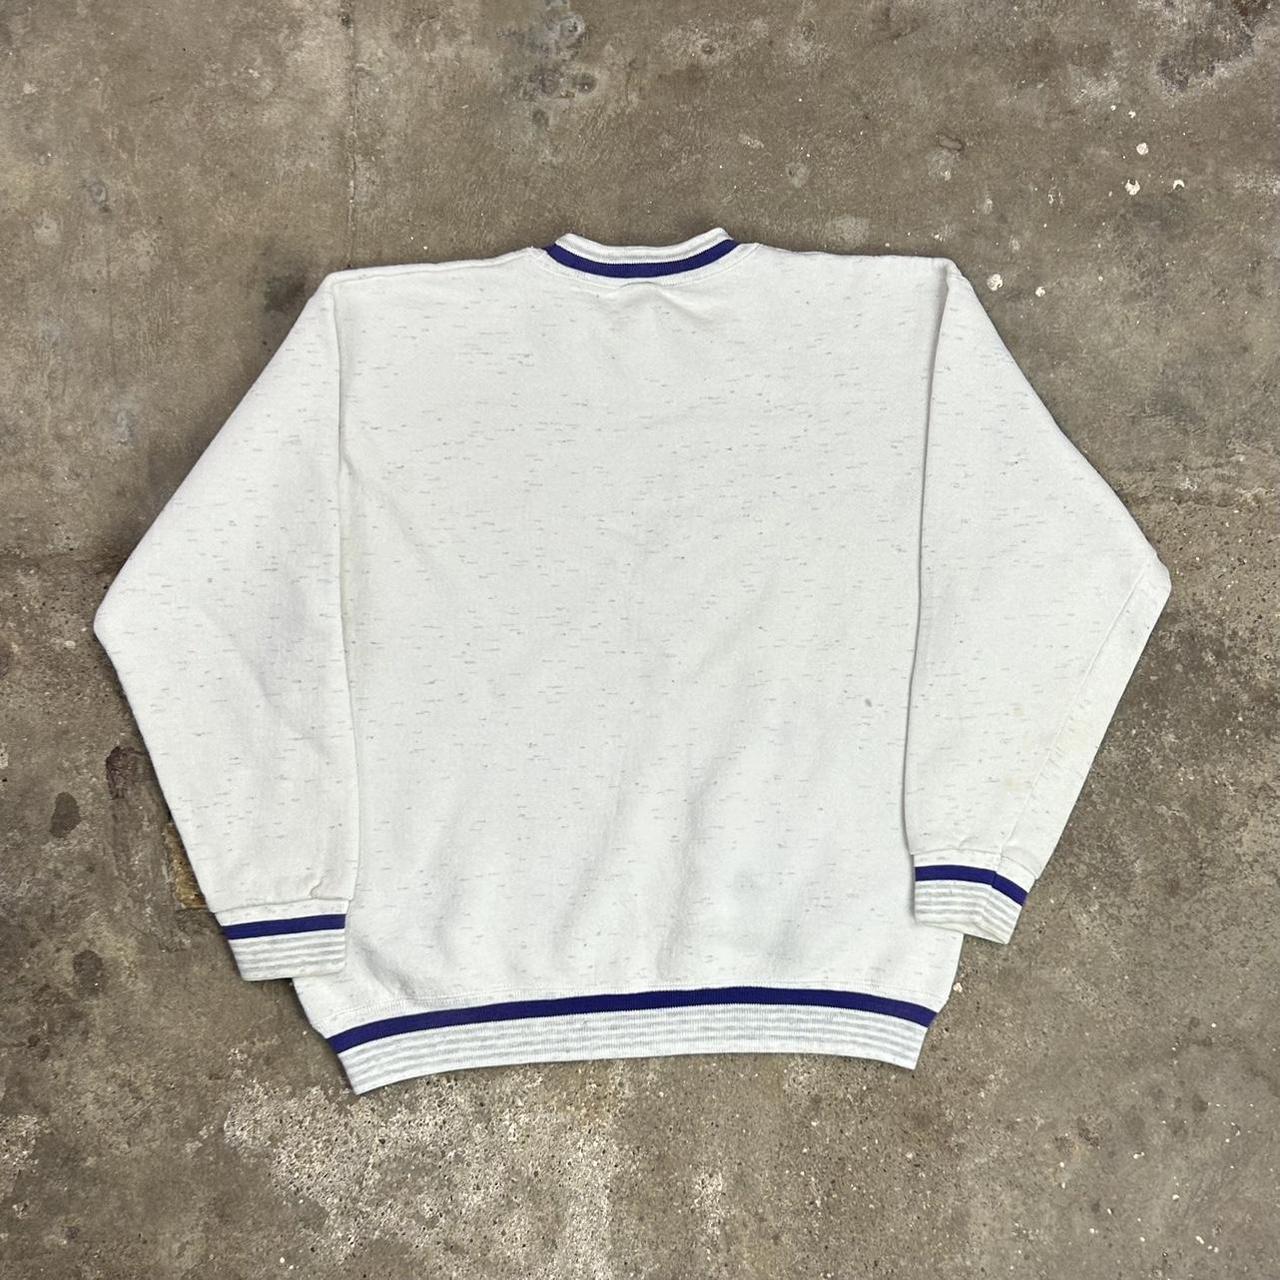 Men's White and Purple Sweatshirt | Depop